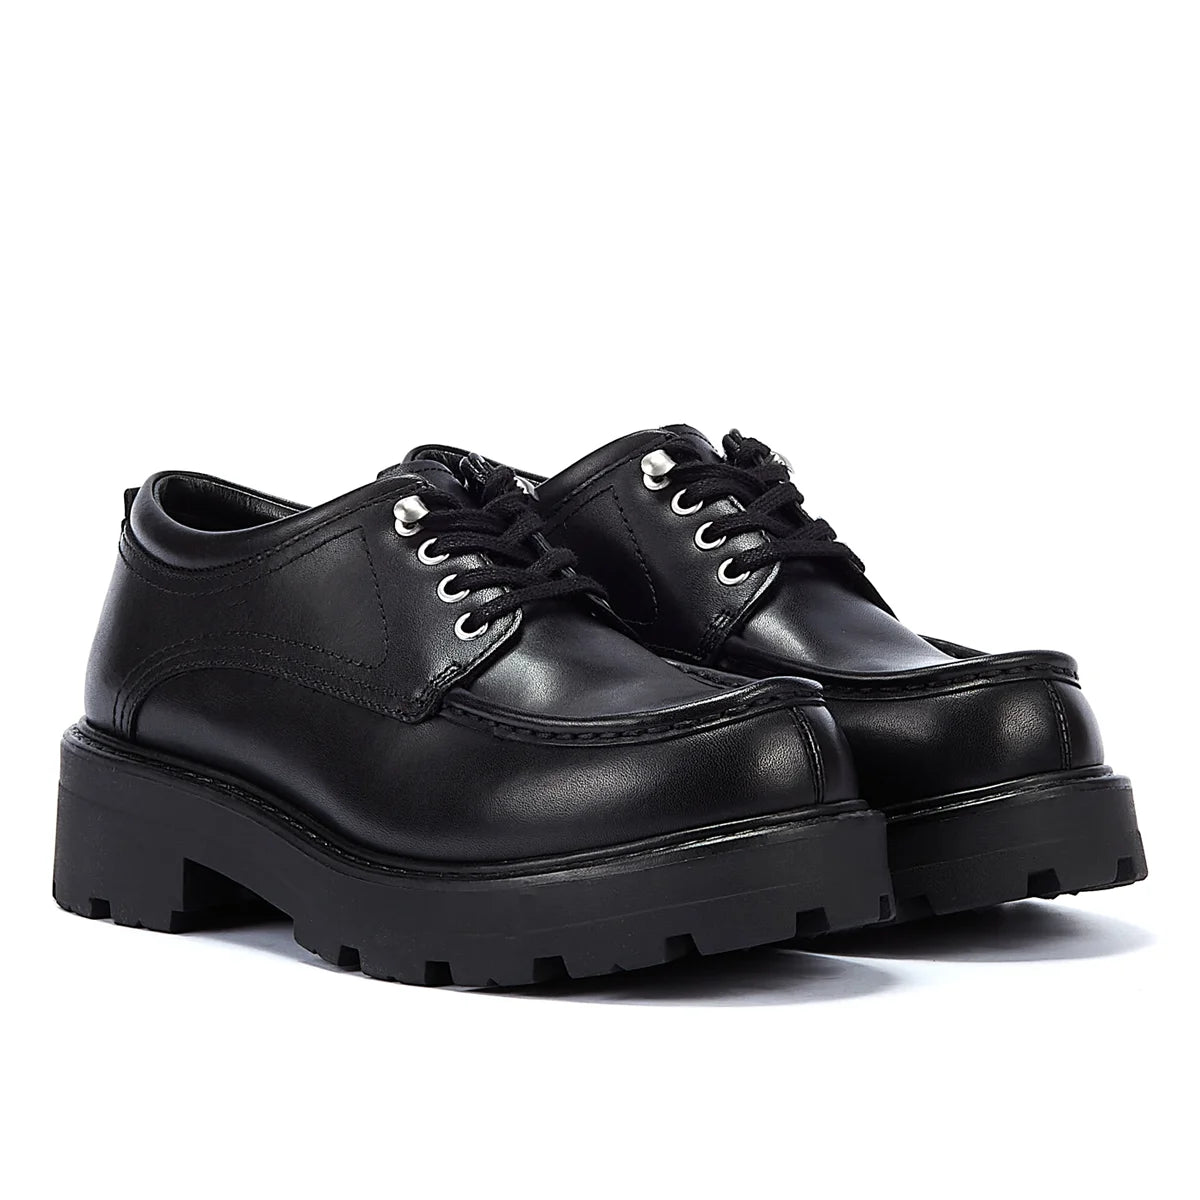 Vagabond Cosmo 2.0 Women’s Black Comfort Shoes